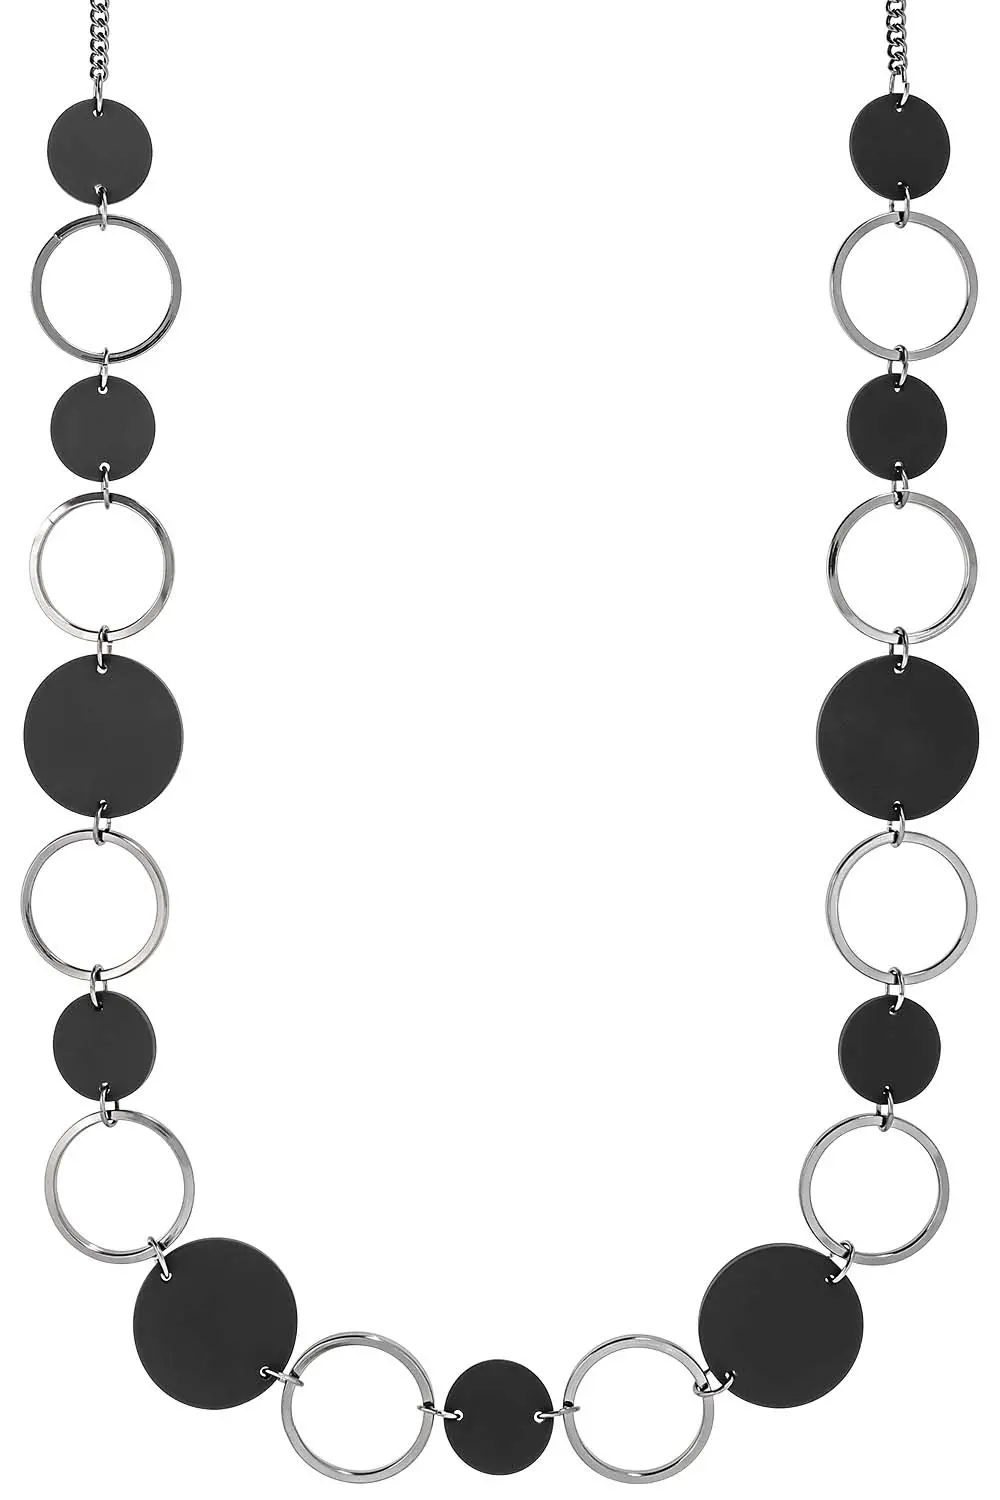 Collar - Black Circles